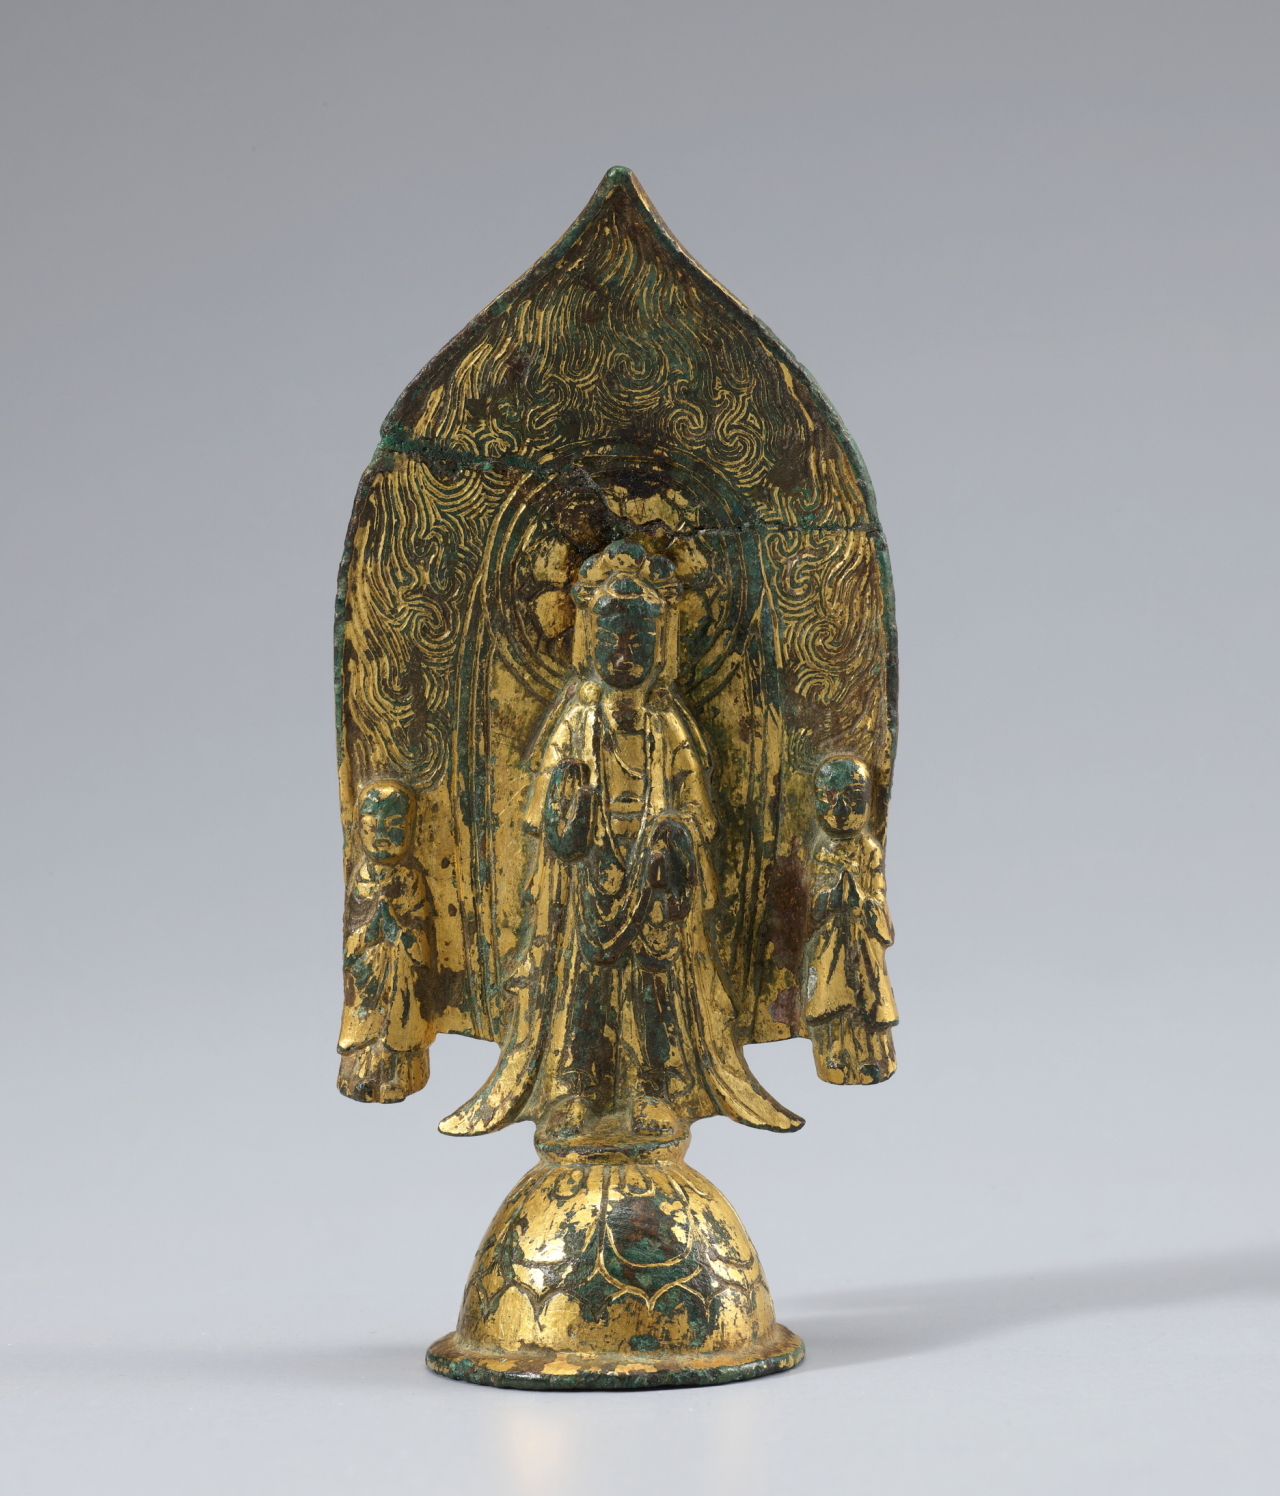 National Treasure No. 134 “Bodhisattva Triad With a Single Halo” from the sixth century, Three Kingdoms era (NMK)